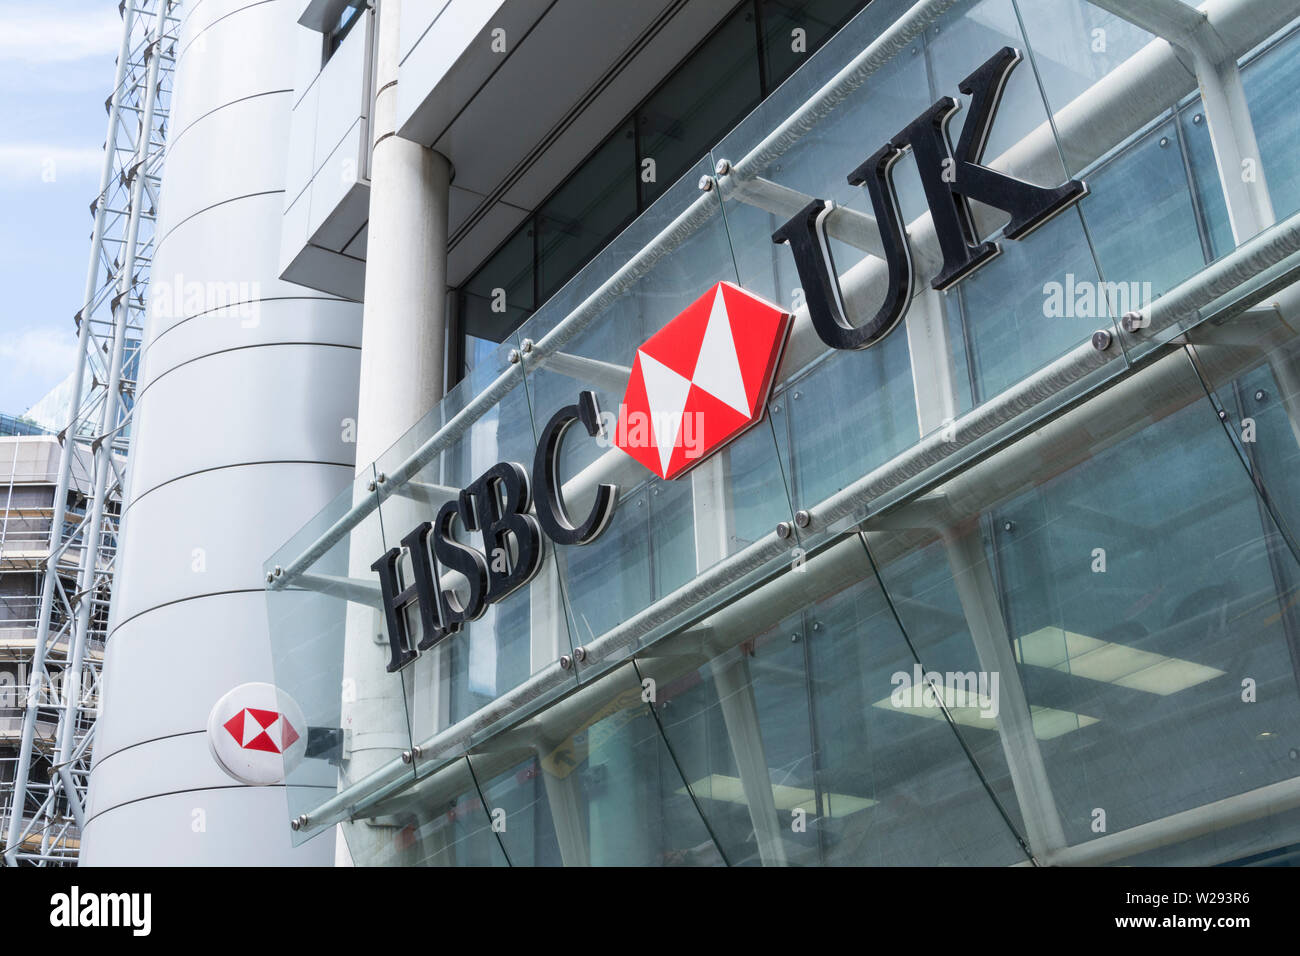 Signage außerhalb der HSBC Bank, City of London, London, Großbritannien Stockfoto